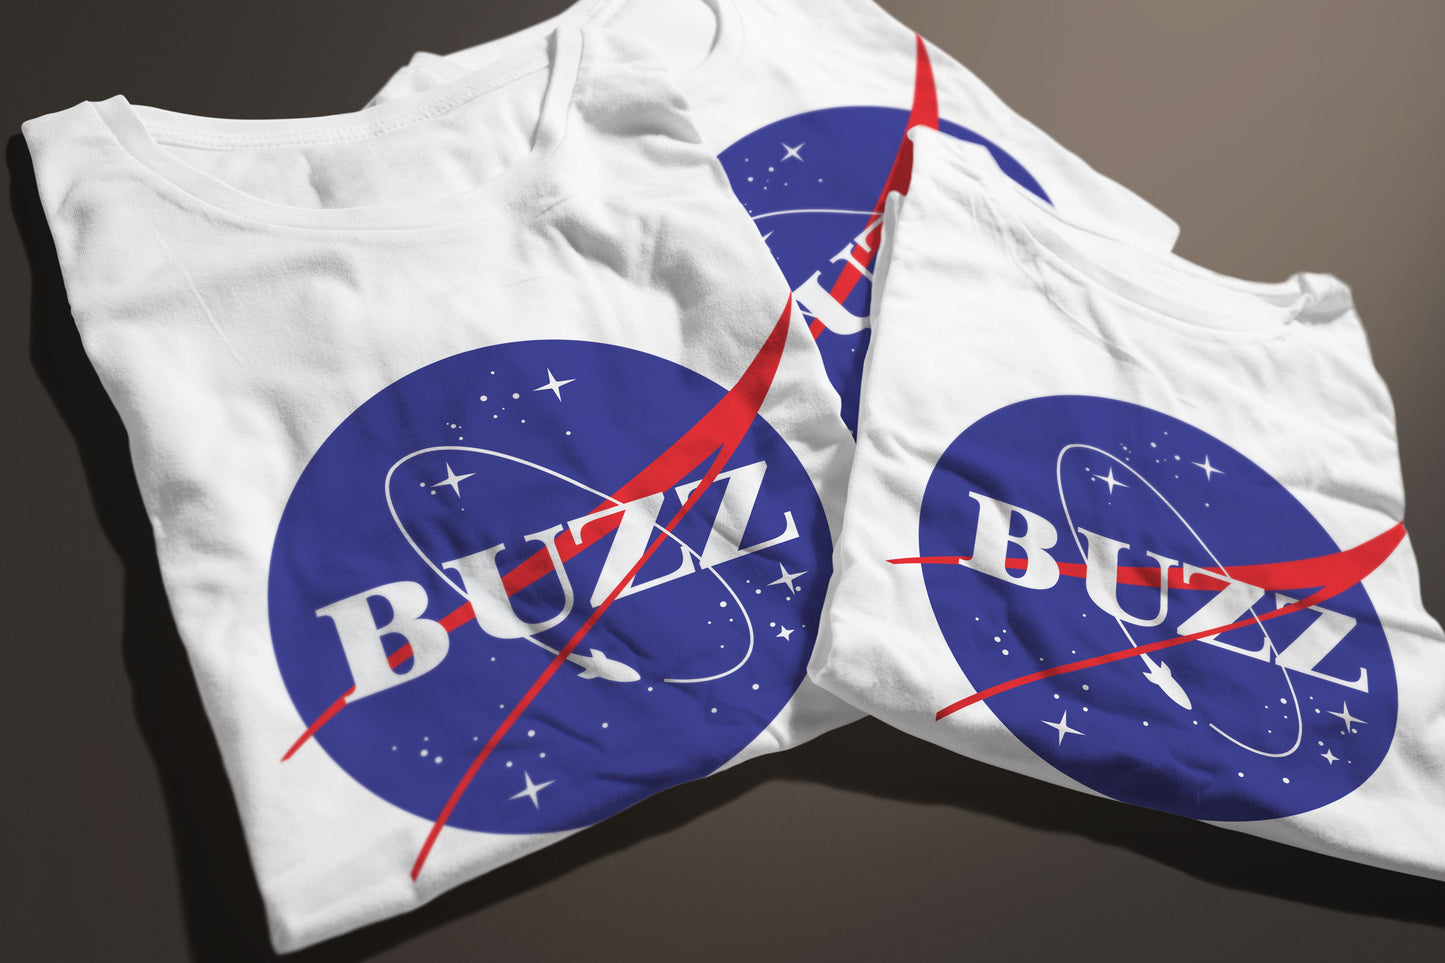 BUZZ - NASA inspired Buzz Lightyear Youth T-Shirt